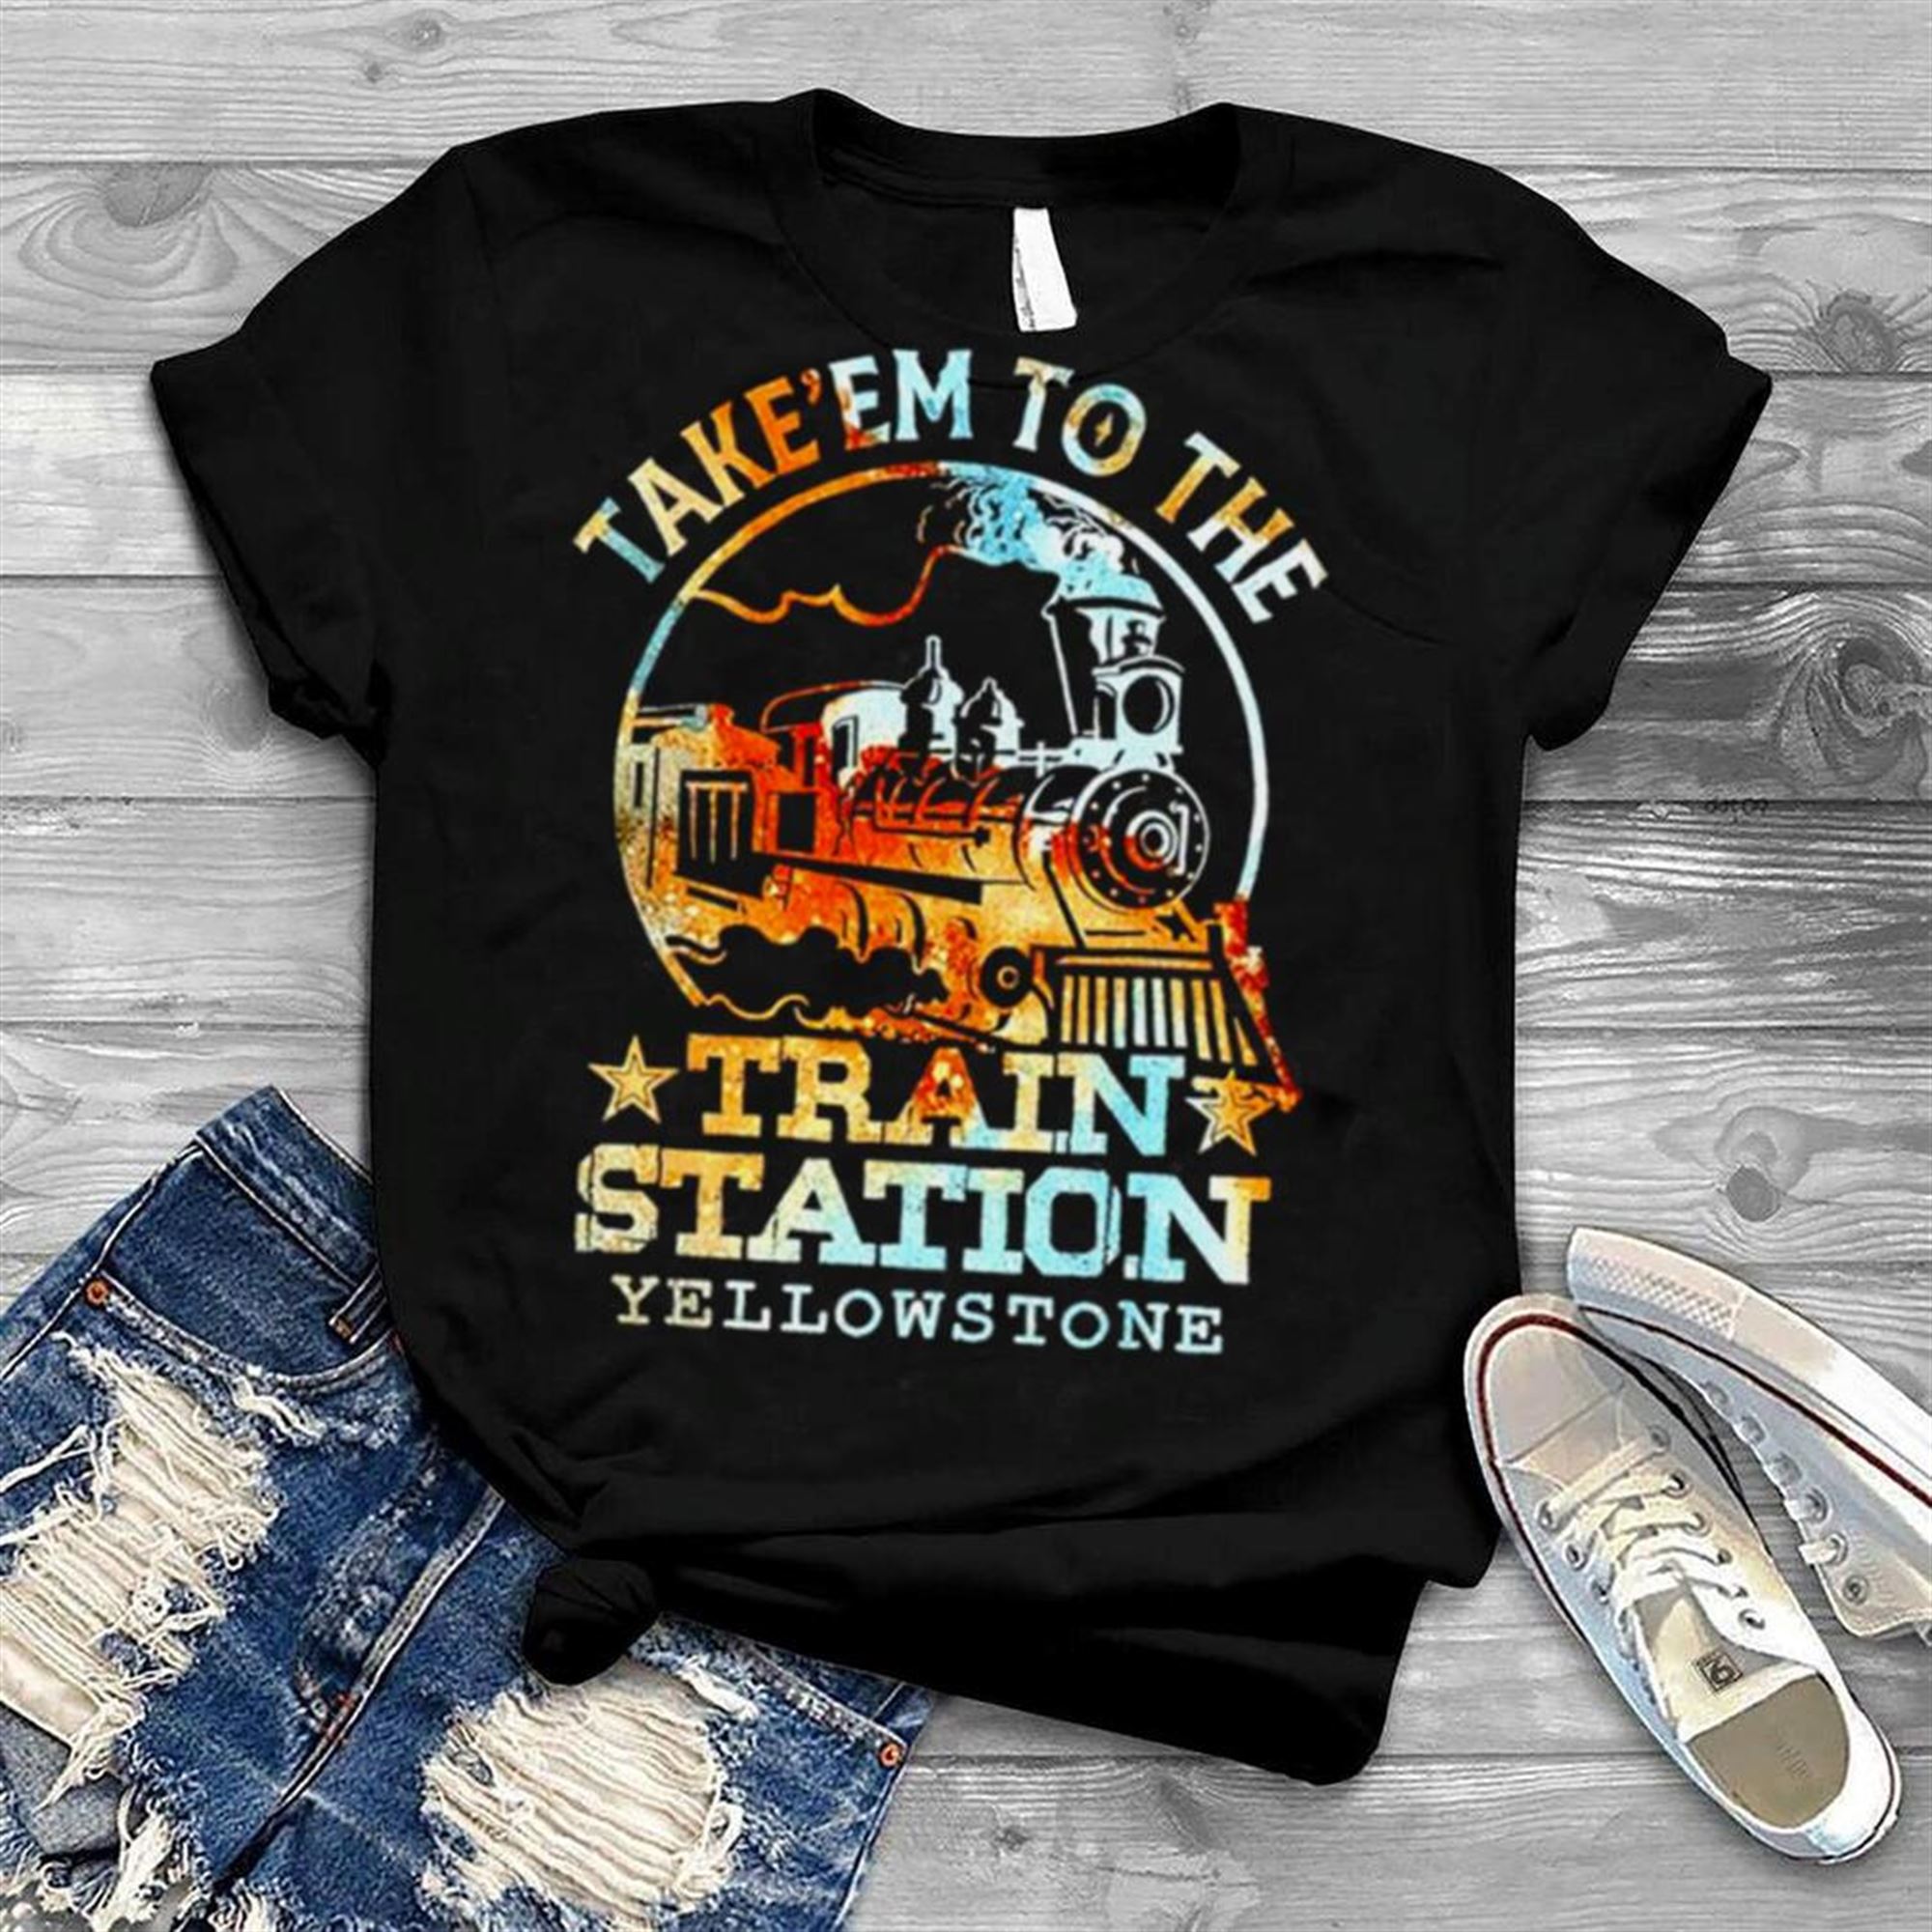 Limited Editon Take Em To The Train Station Yellowstone Shirt 